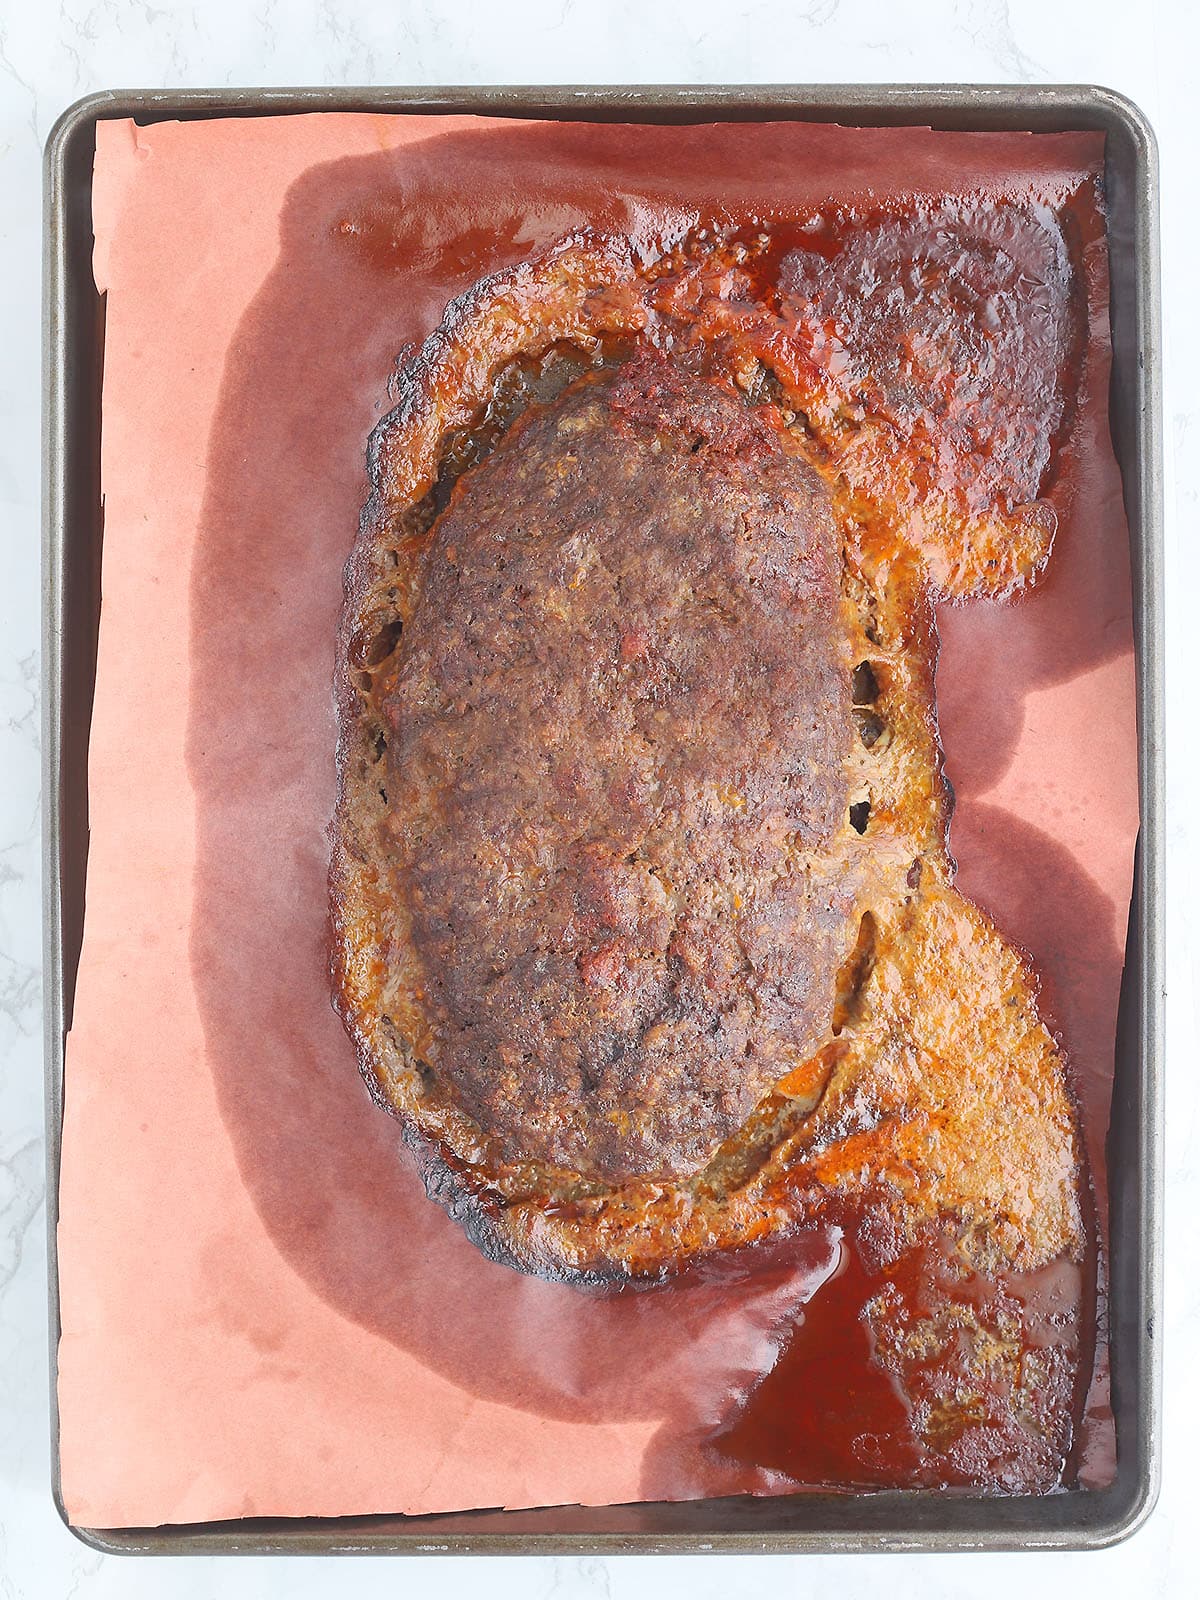 Baked meatloaf on a sheet pan.